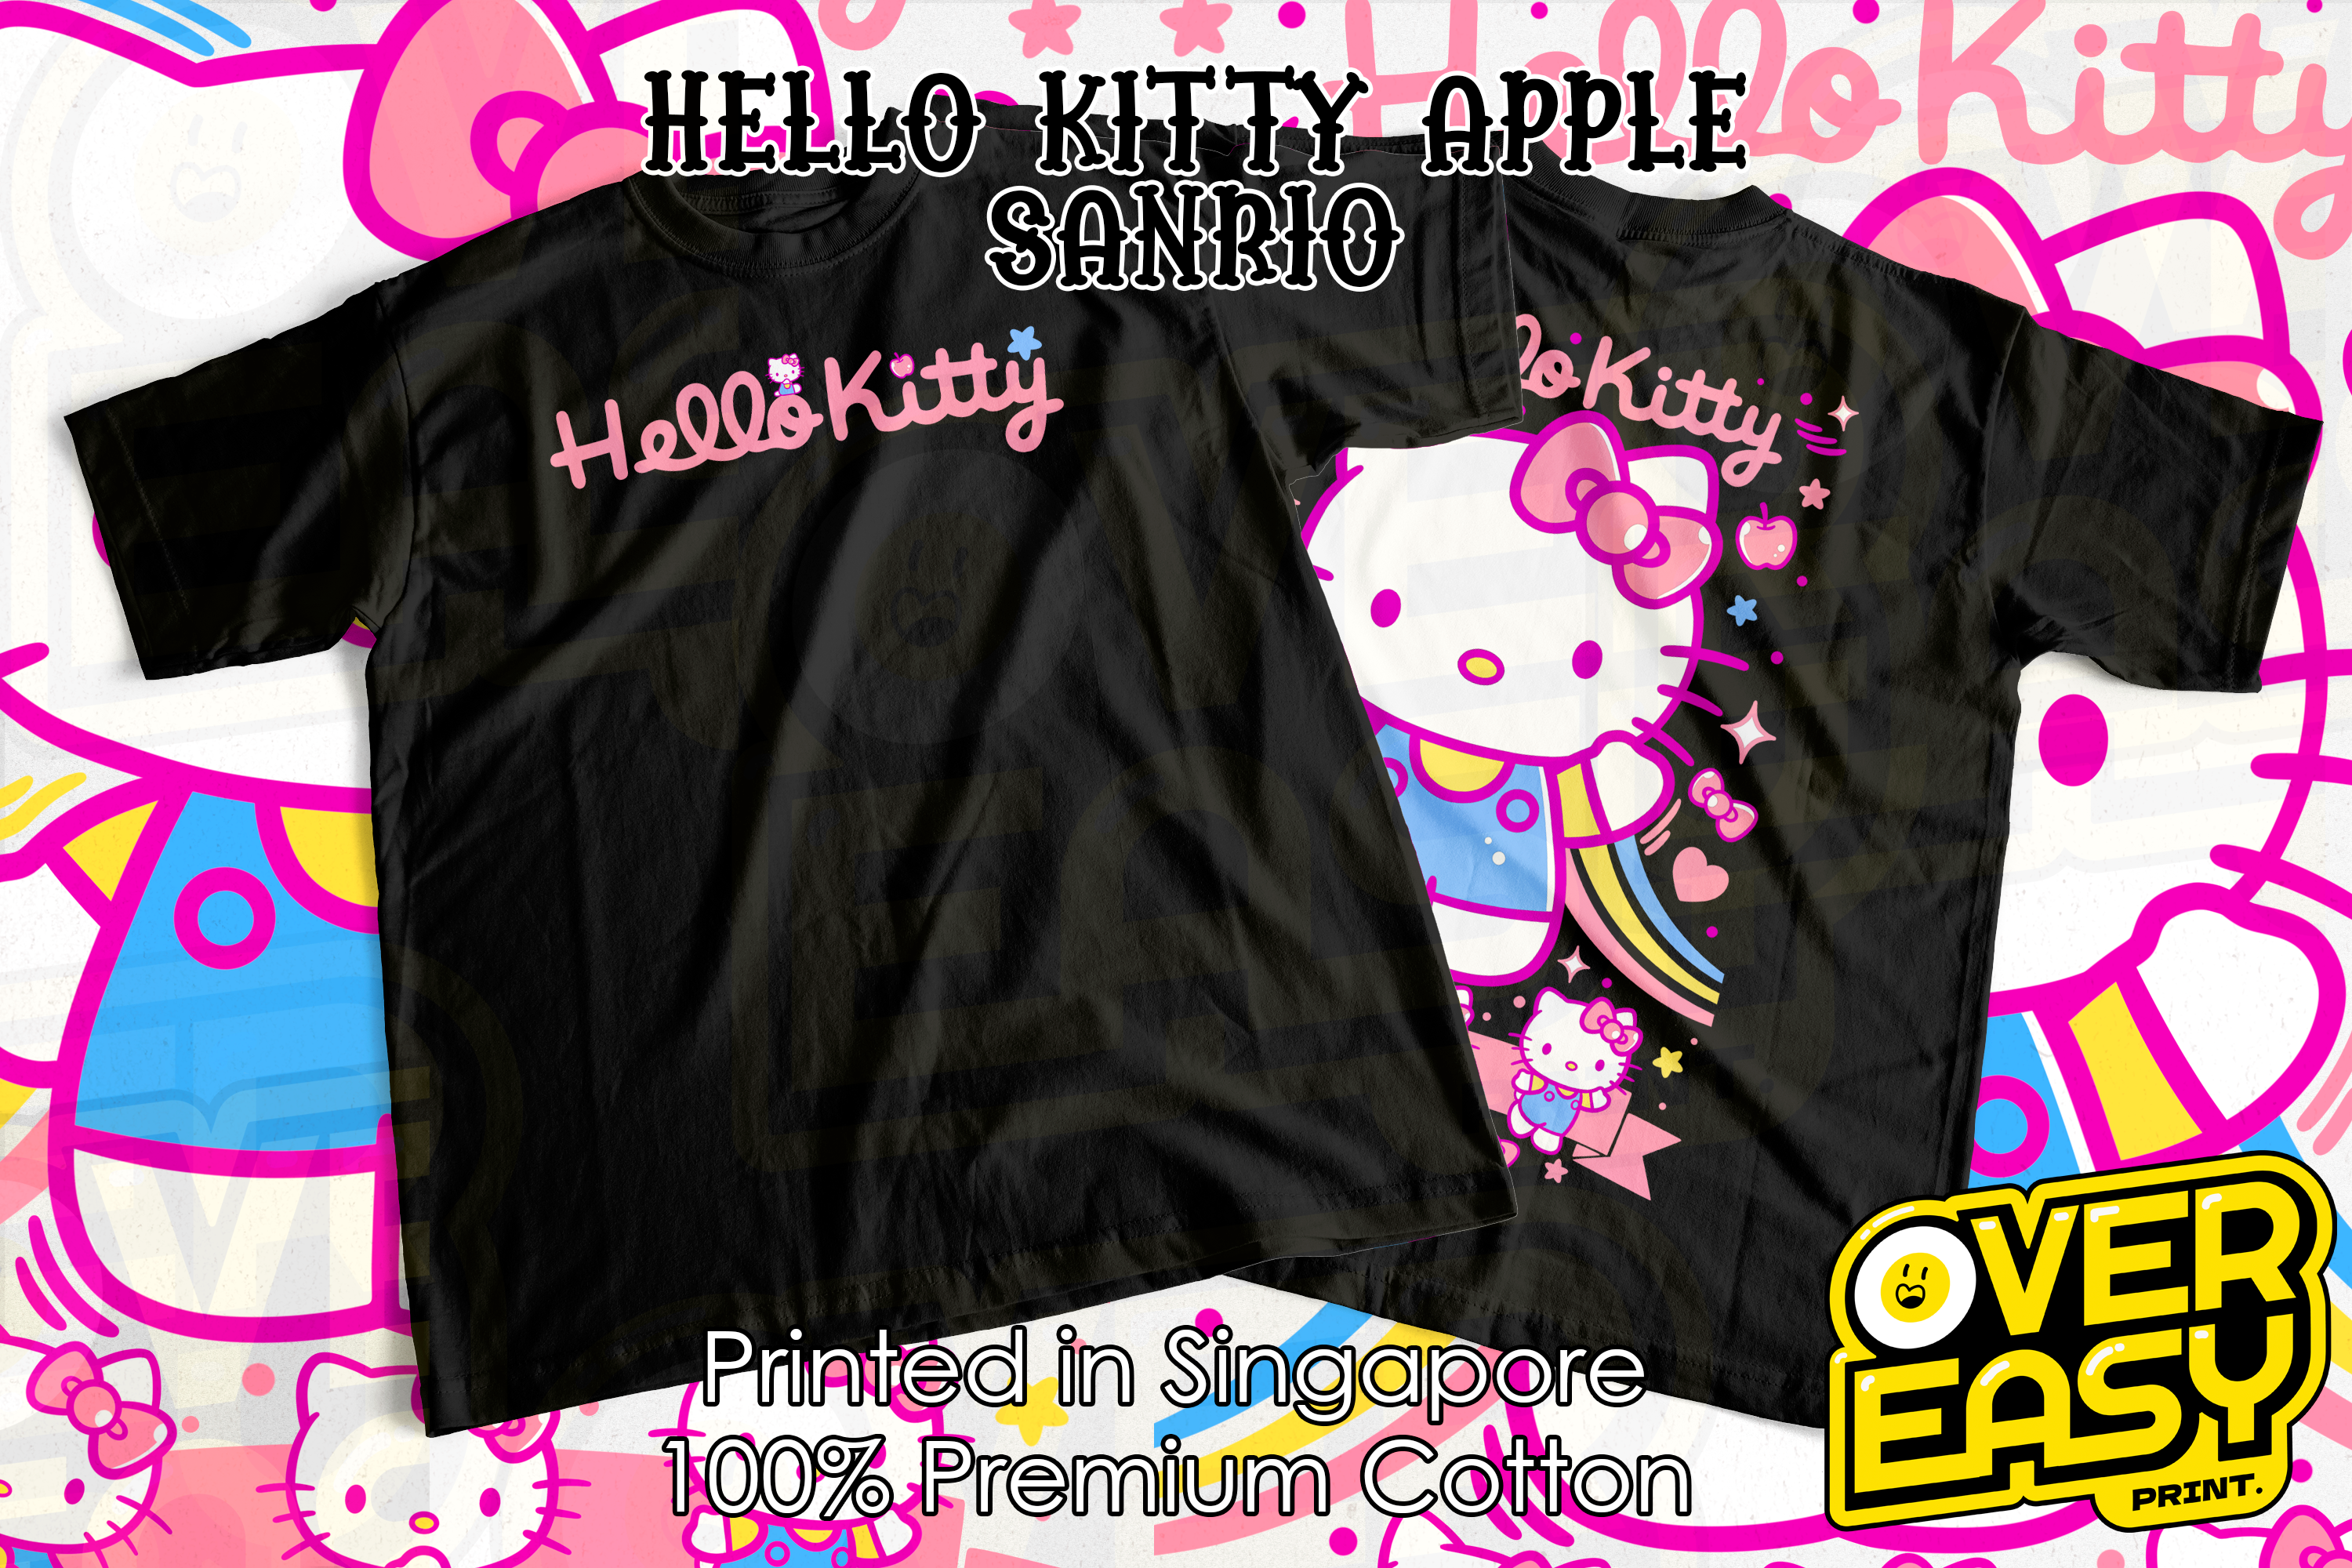 Kitty Apple Fanart T-Shirt